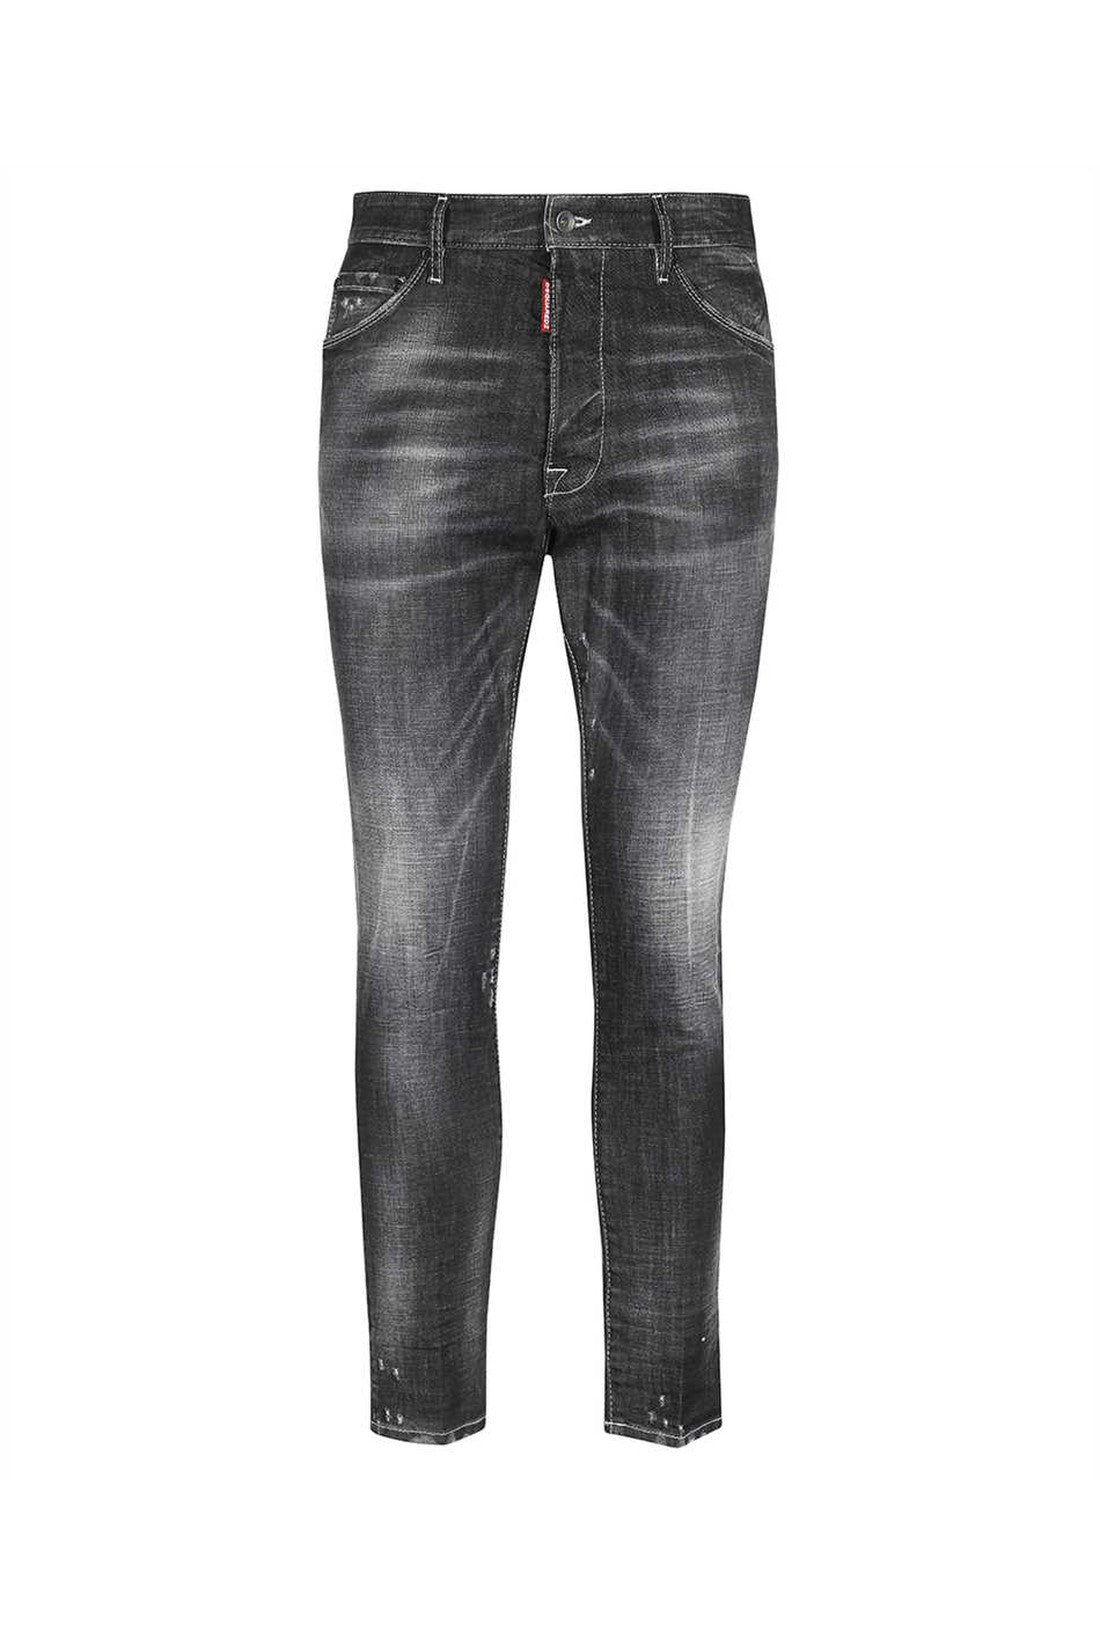 Dsquared2-OUTLET-SALE-Relax Long Crunch stretch cotton jeans-ARCHIVIST